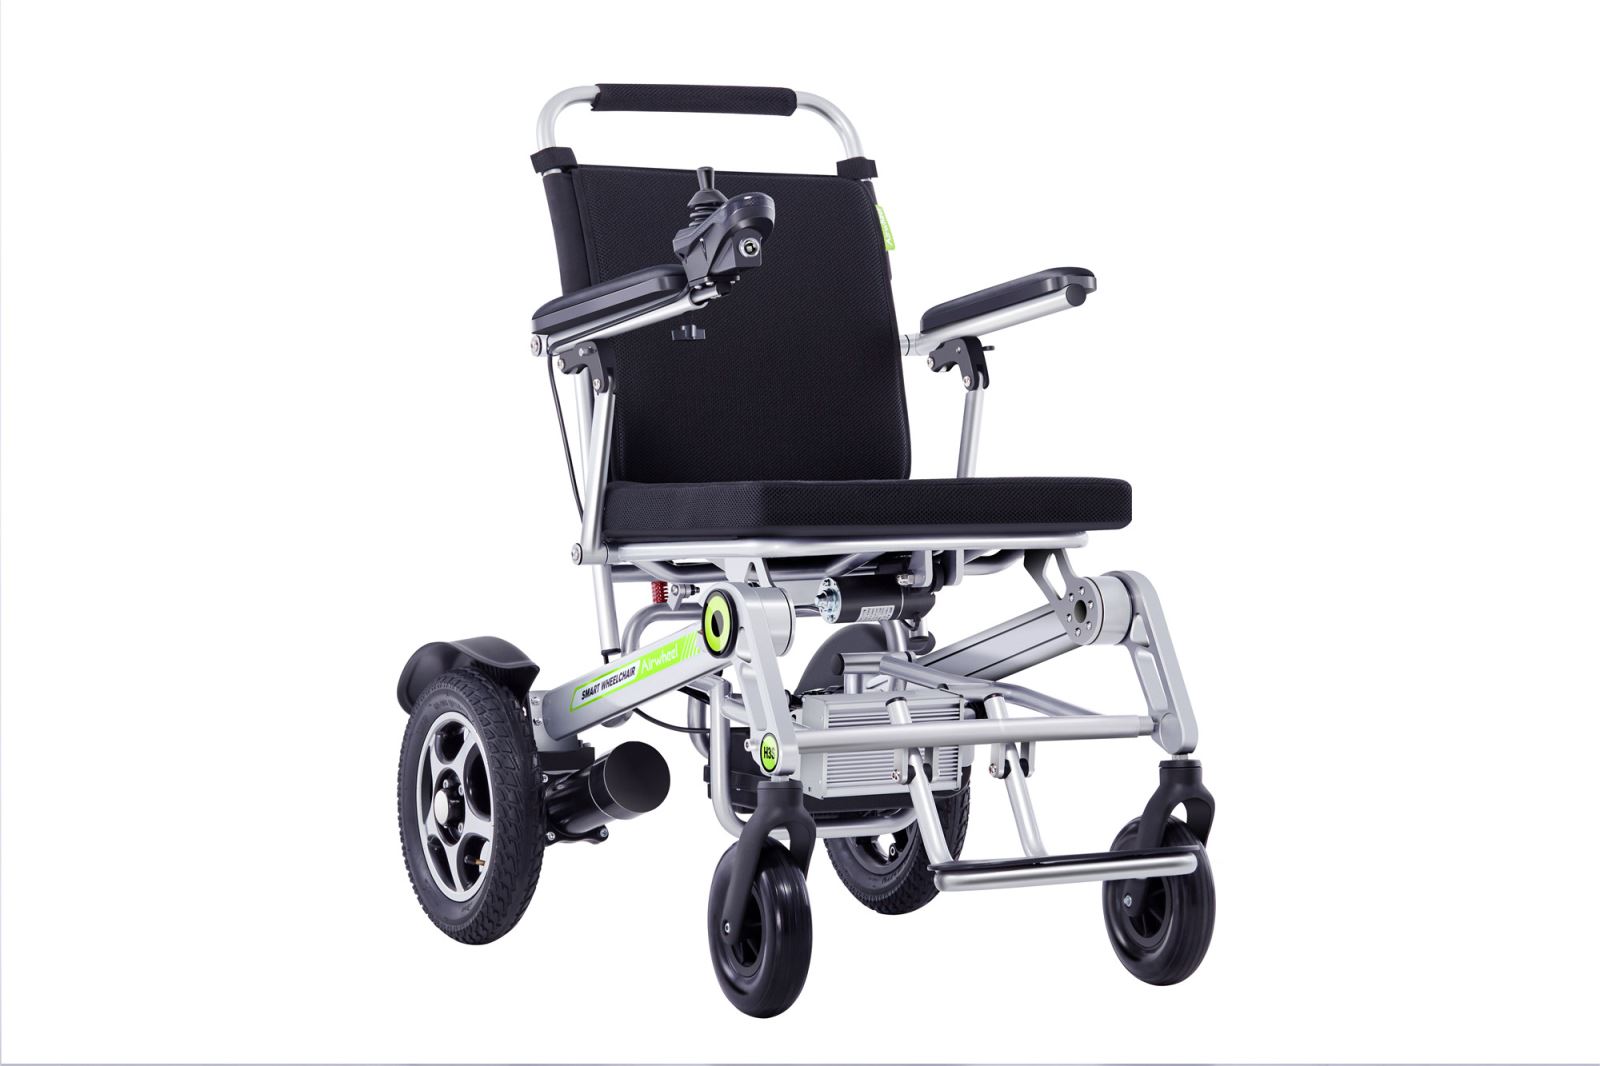 Airwheel H3S power wheelchairs